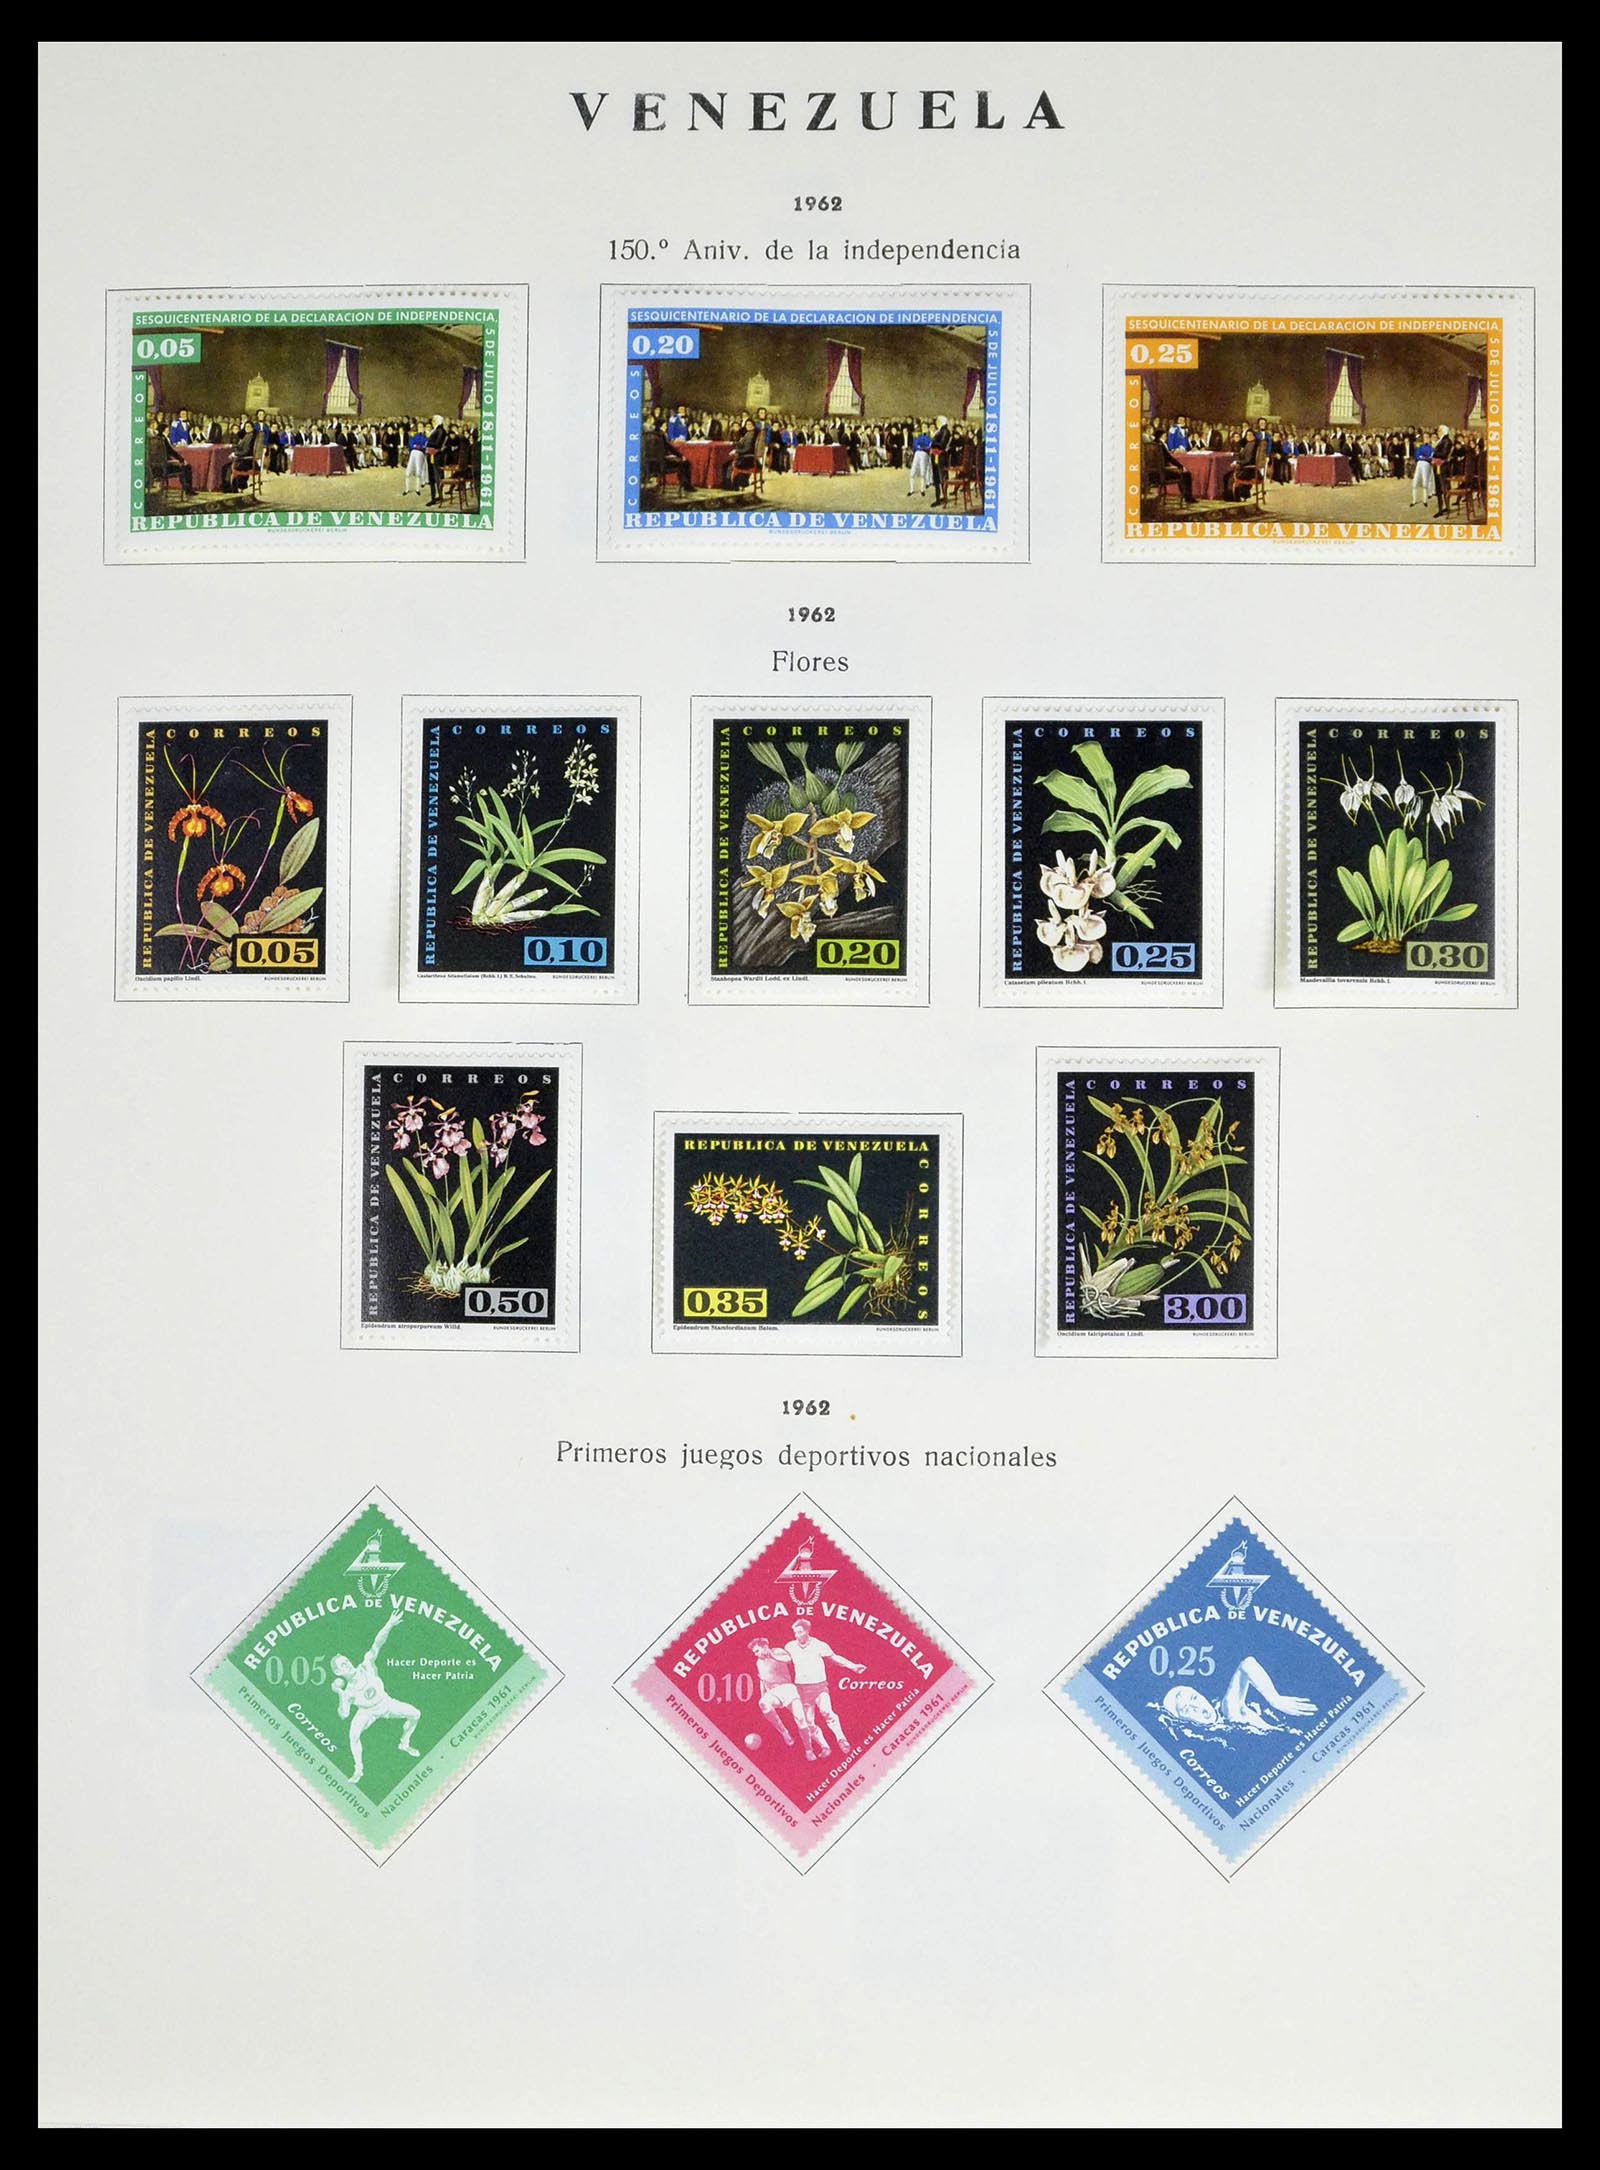 39223 0046 - Stamp collection 39223 Venezuela 1859-1984.